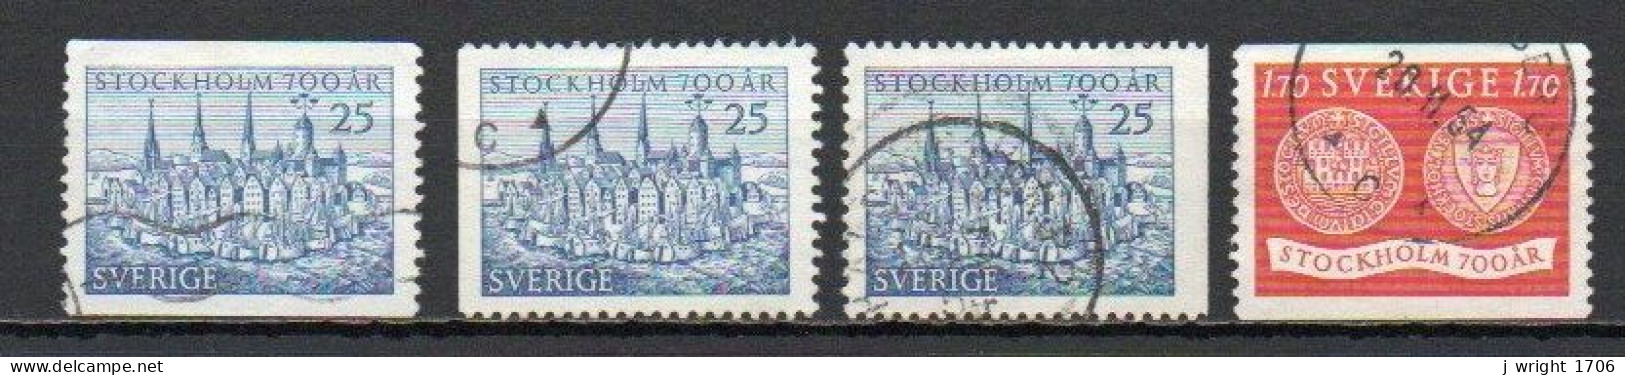 Sweden, 1953, Stockholm 700th Anniv, Set, USED - Used Stamps